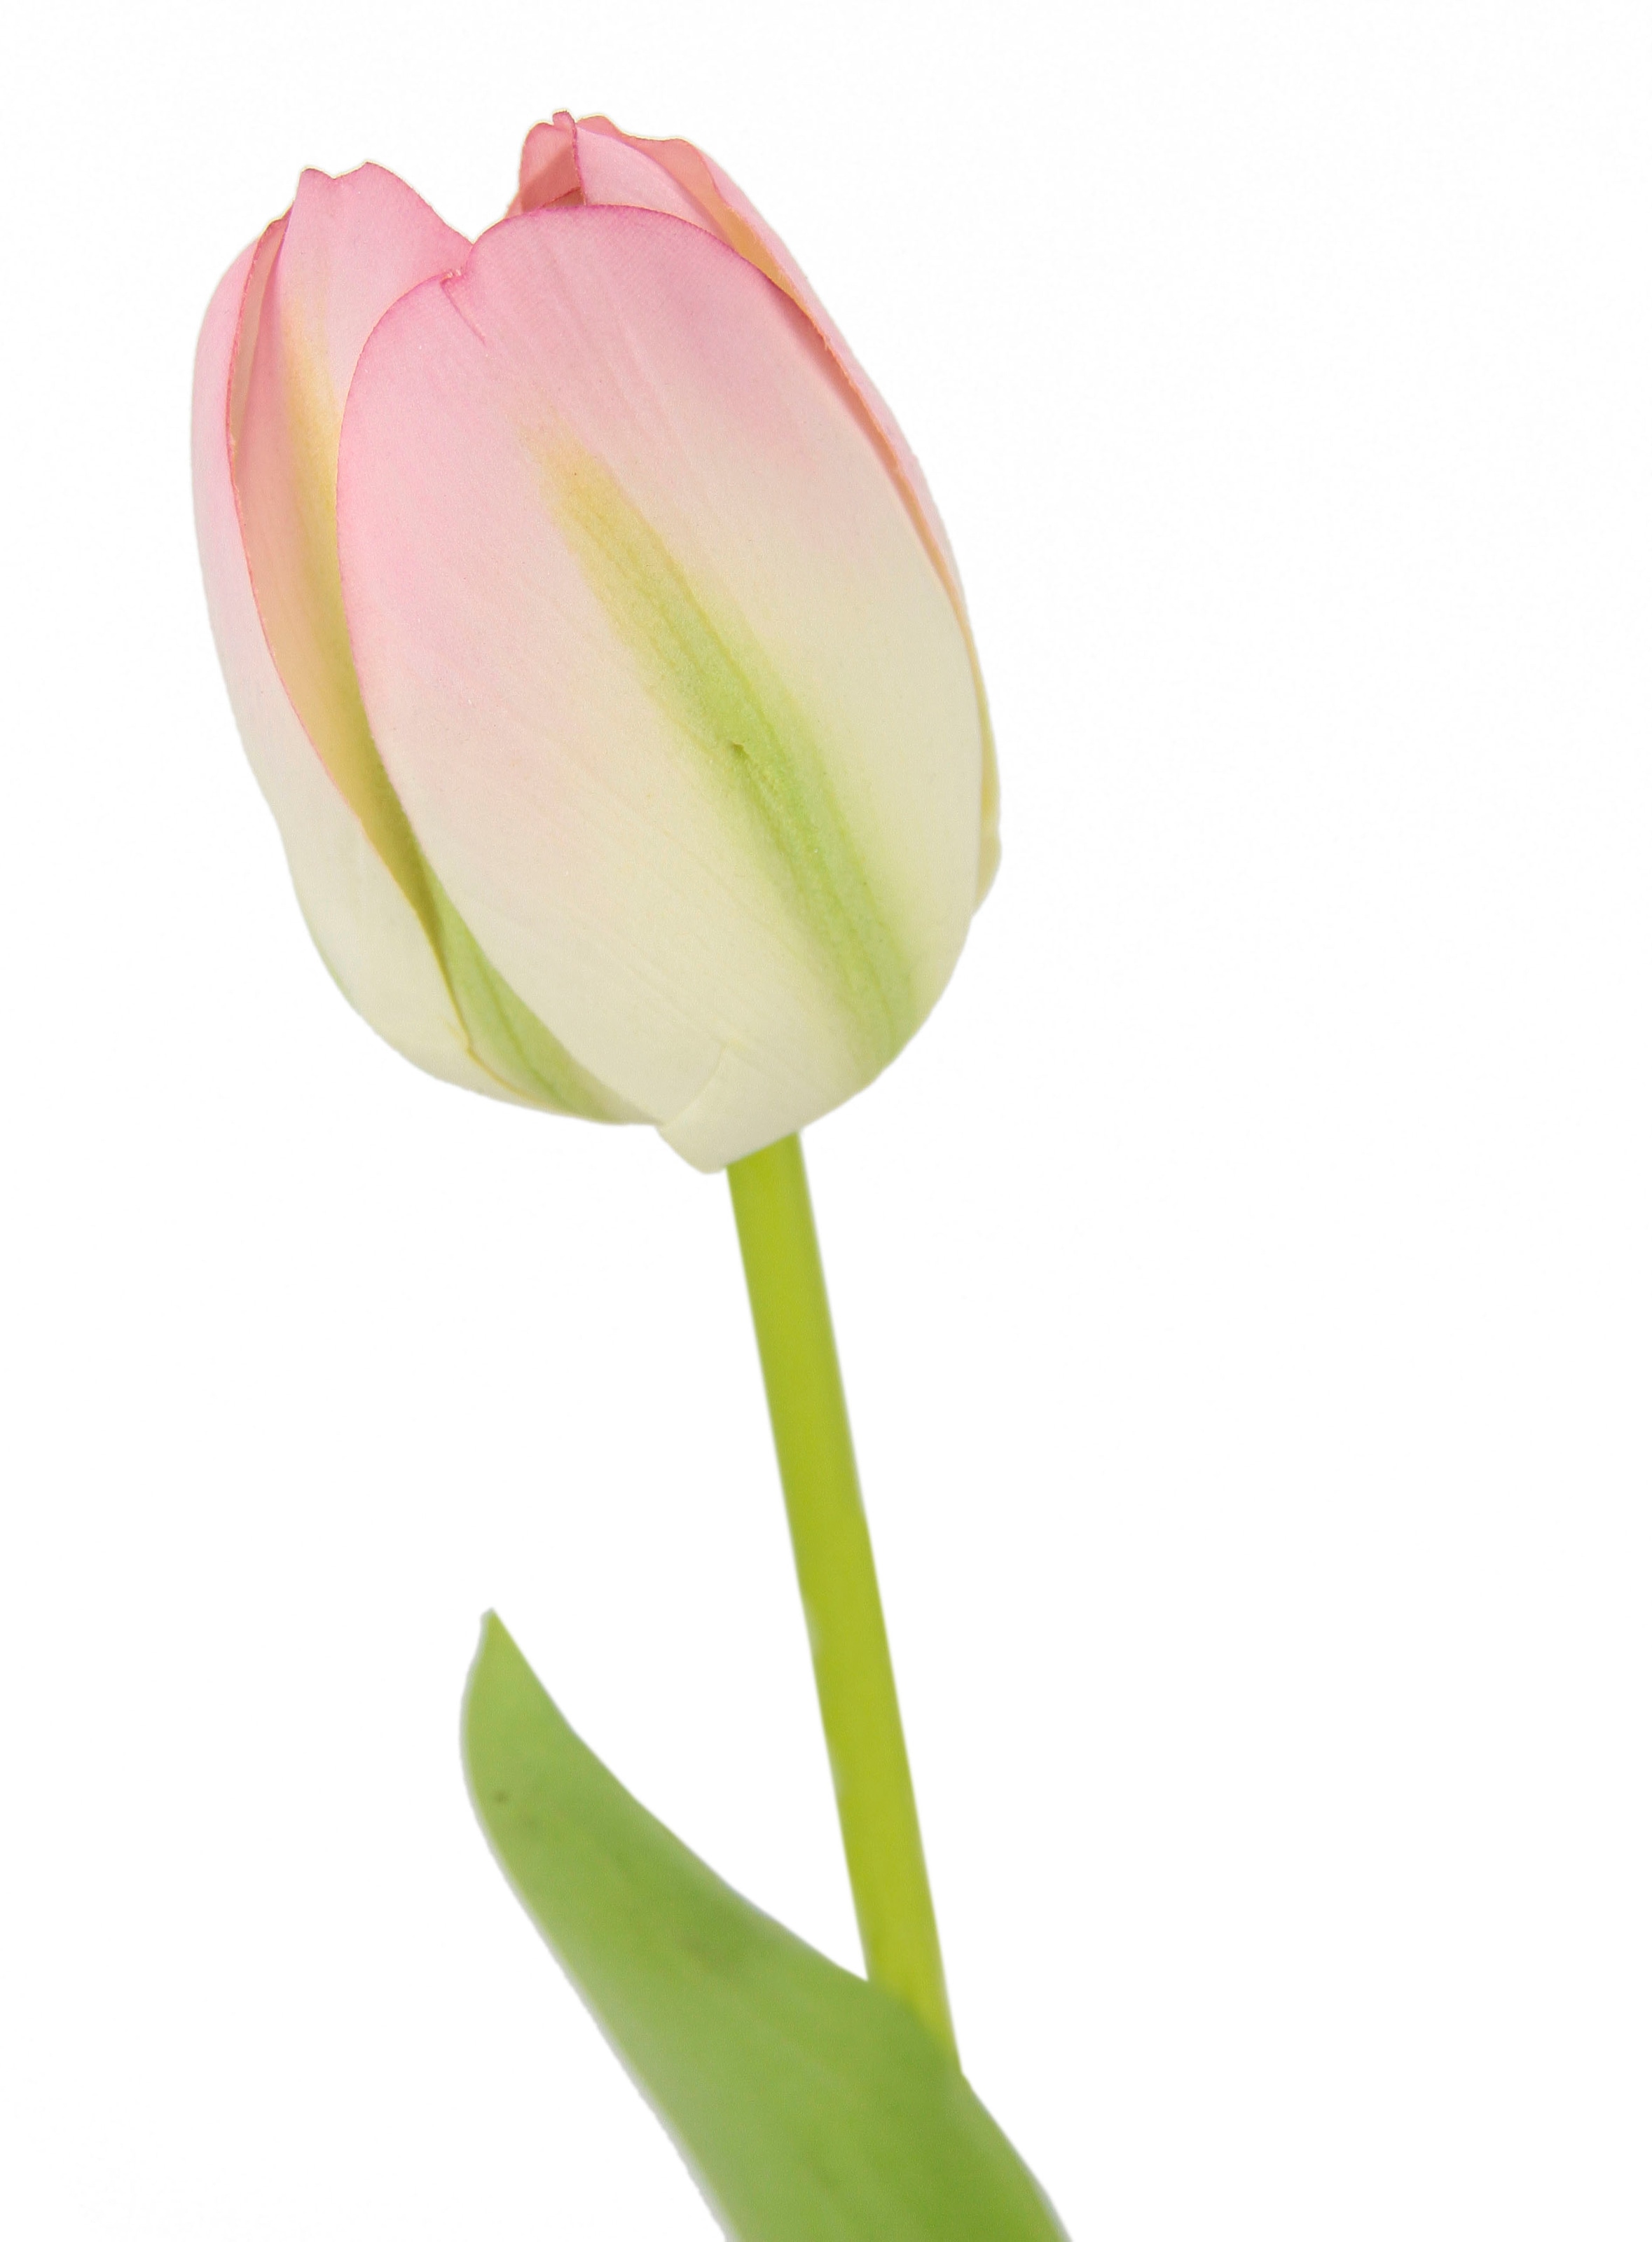 I.GE.A. Kunstblume »Real Touch Tulpen«, 5er Set künstliche Tulpenknospen,  Kunstblumen, Stielblume jetzt kaufen